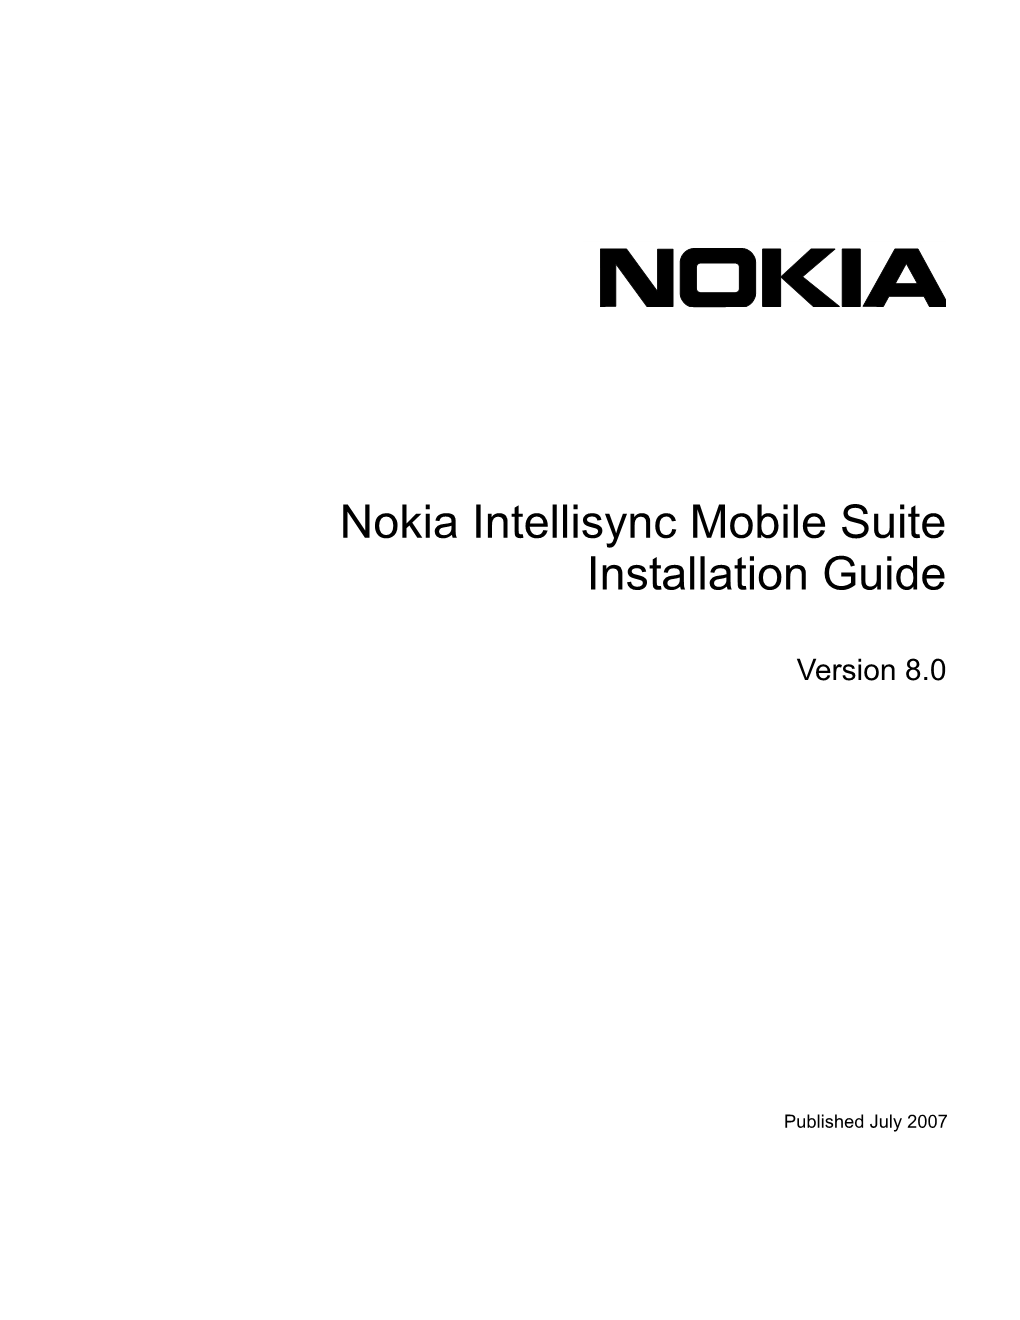 Nokia Intellisync Mobile Suite Installation Guide